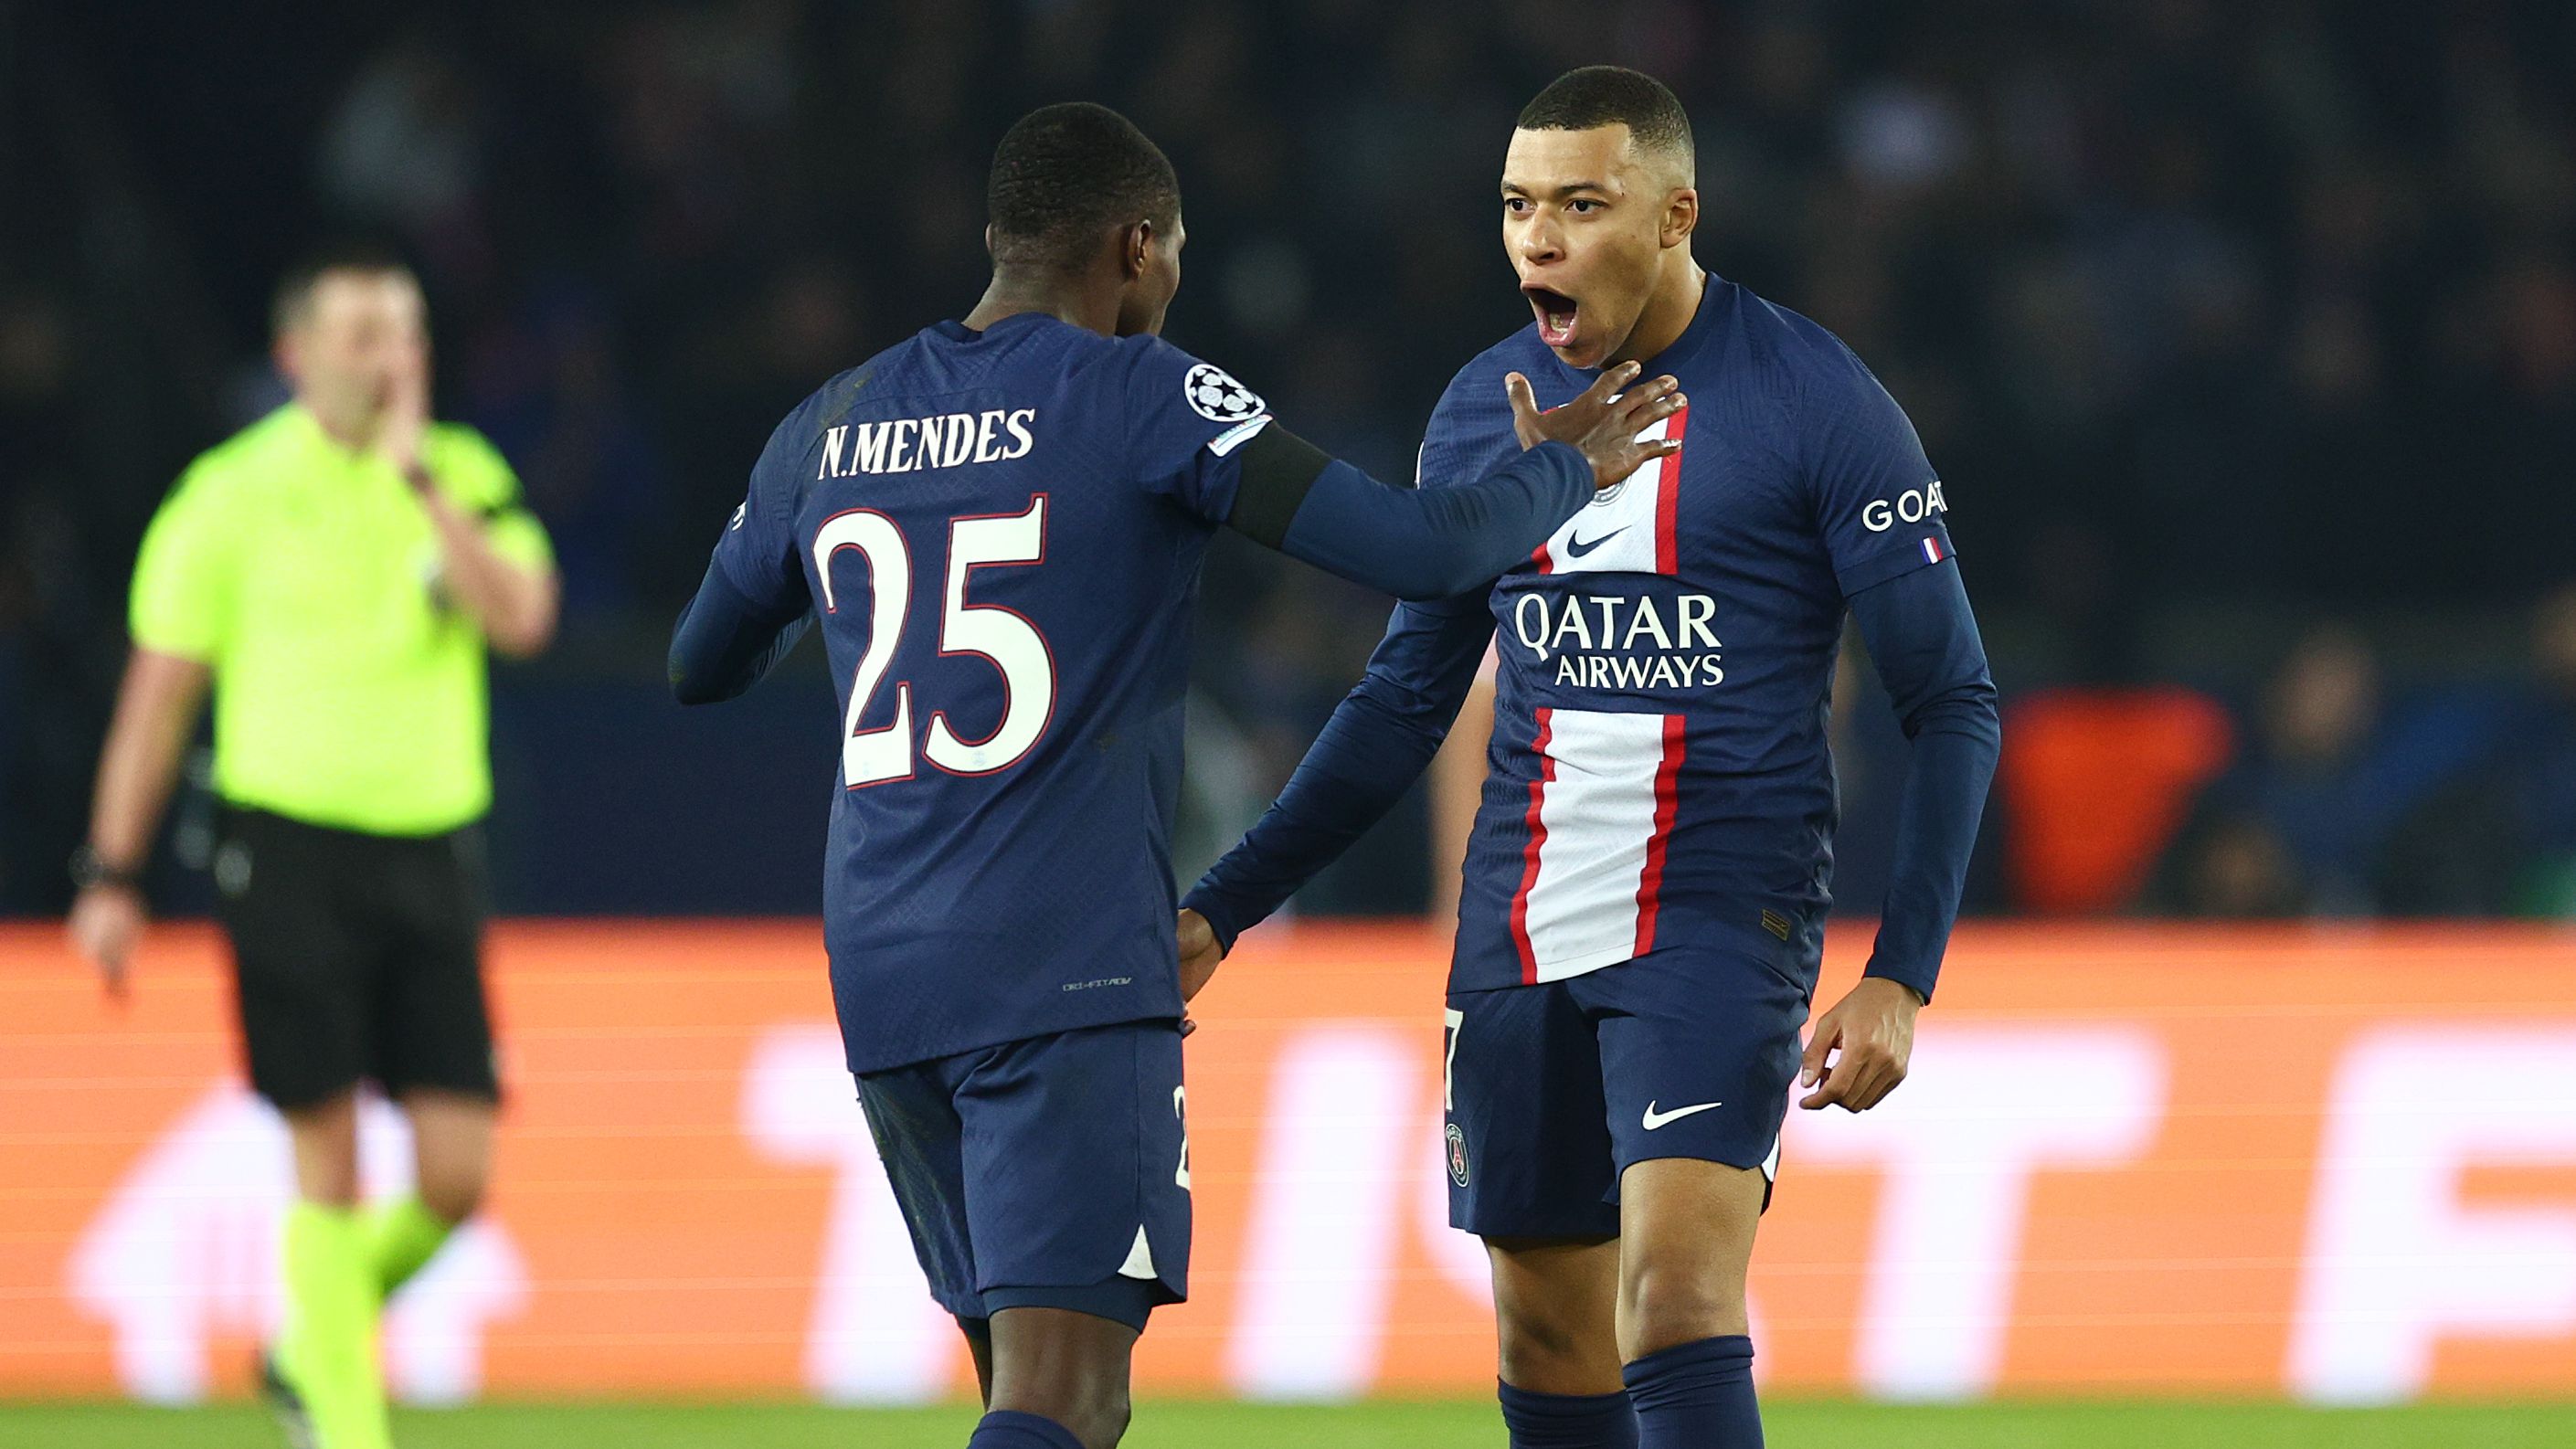 Nuno Mendes e Mbappé comemorando gol que foi anulado (Crédito: Getty Images)